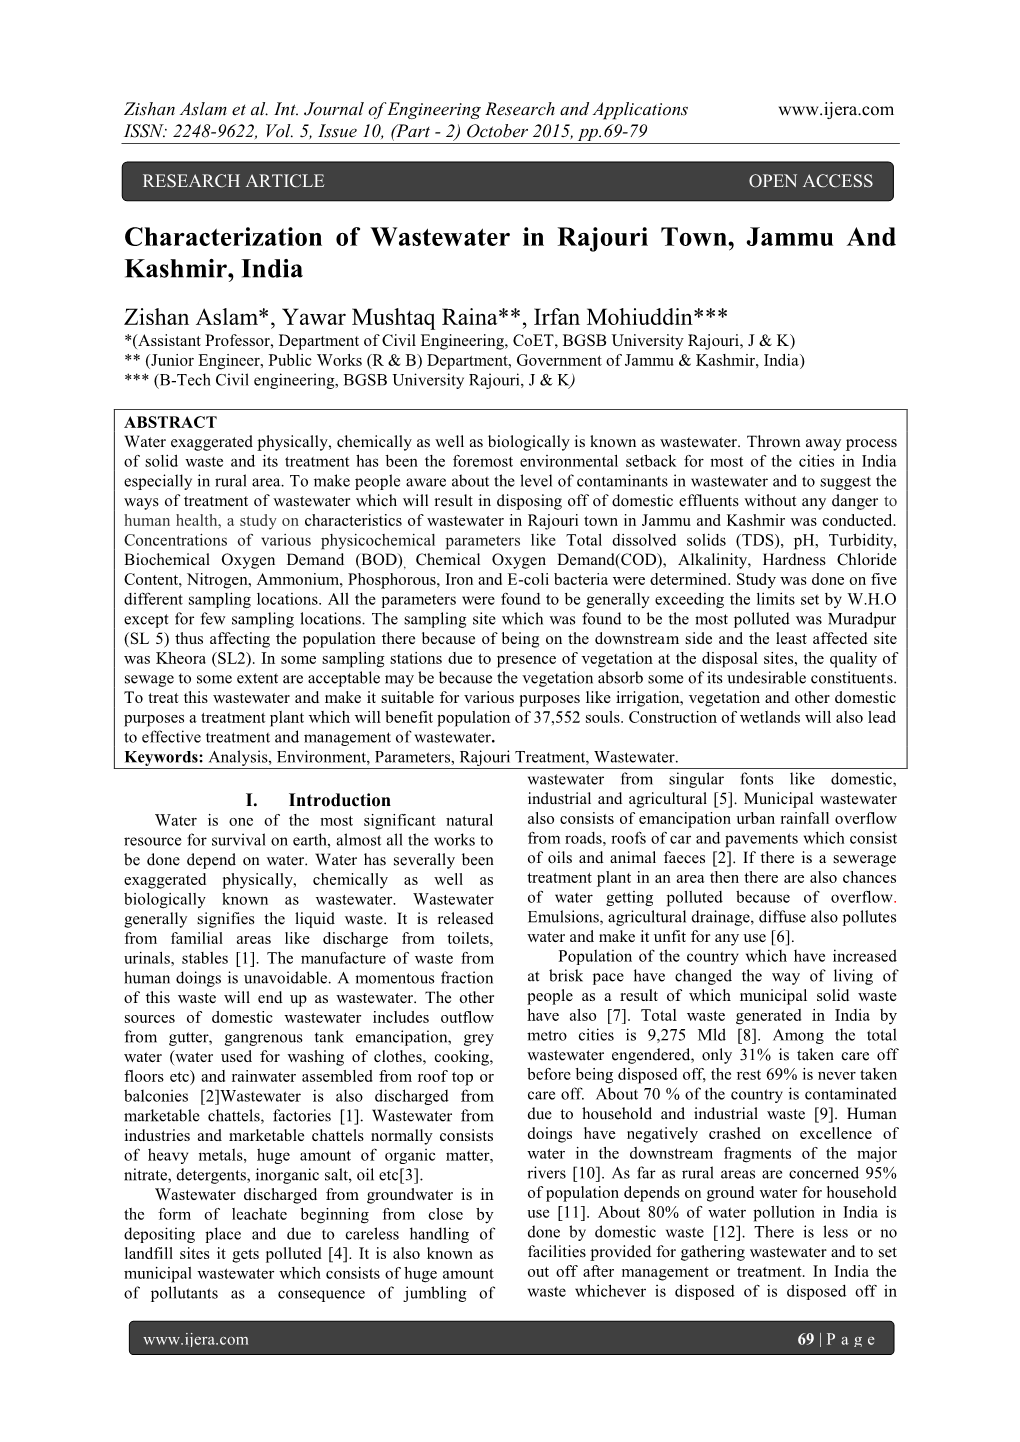 Characterization of Wastewater in Rajouri Town, Jammu and Kashmir, India